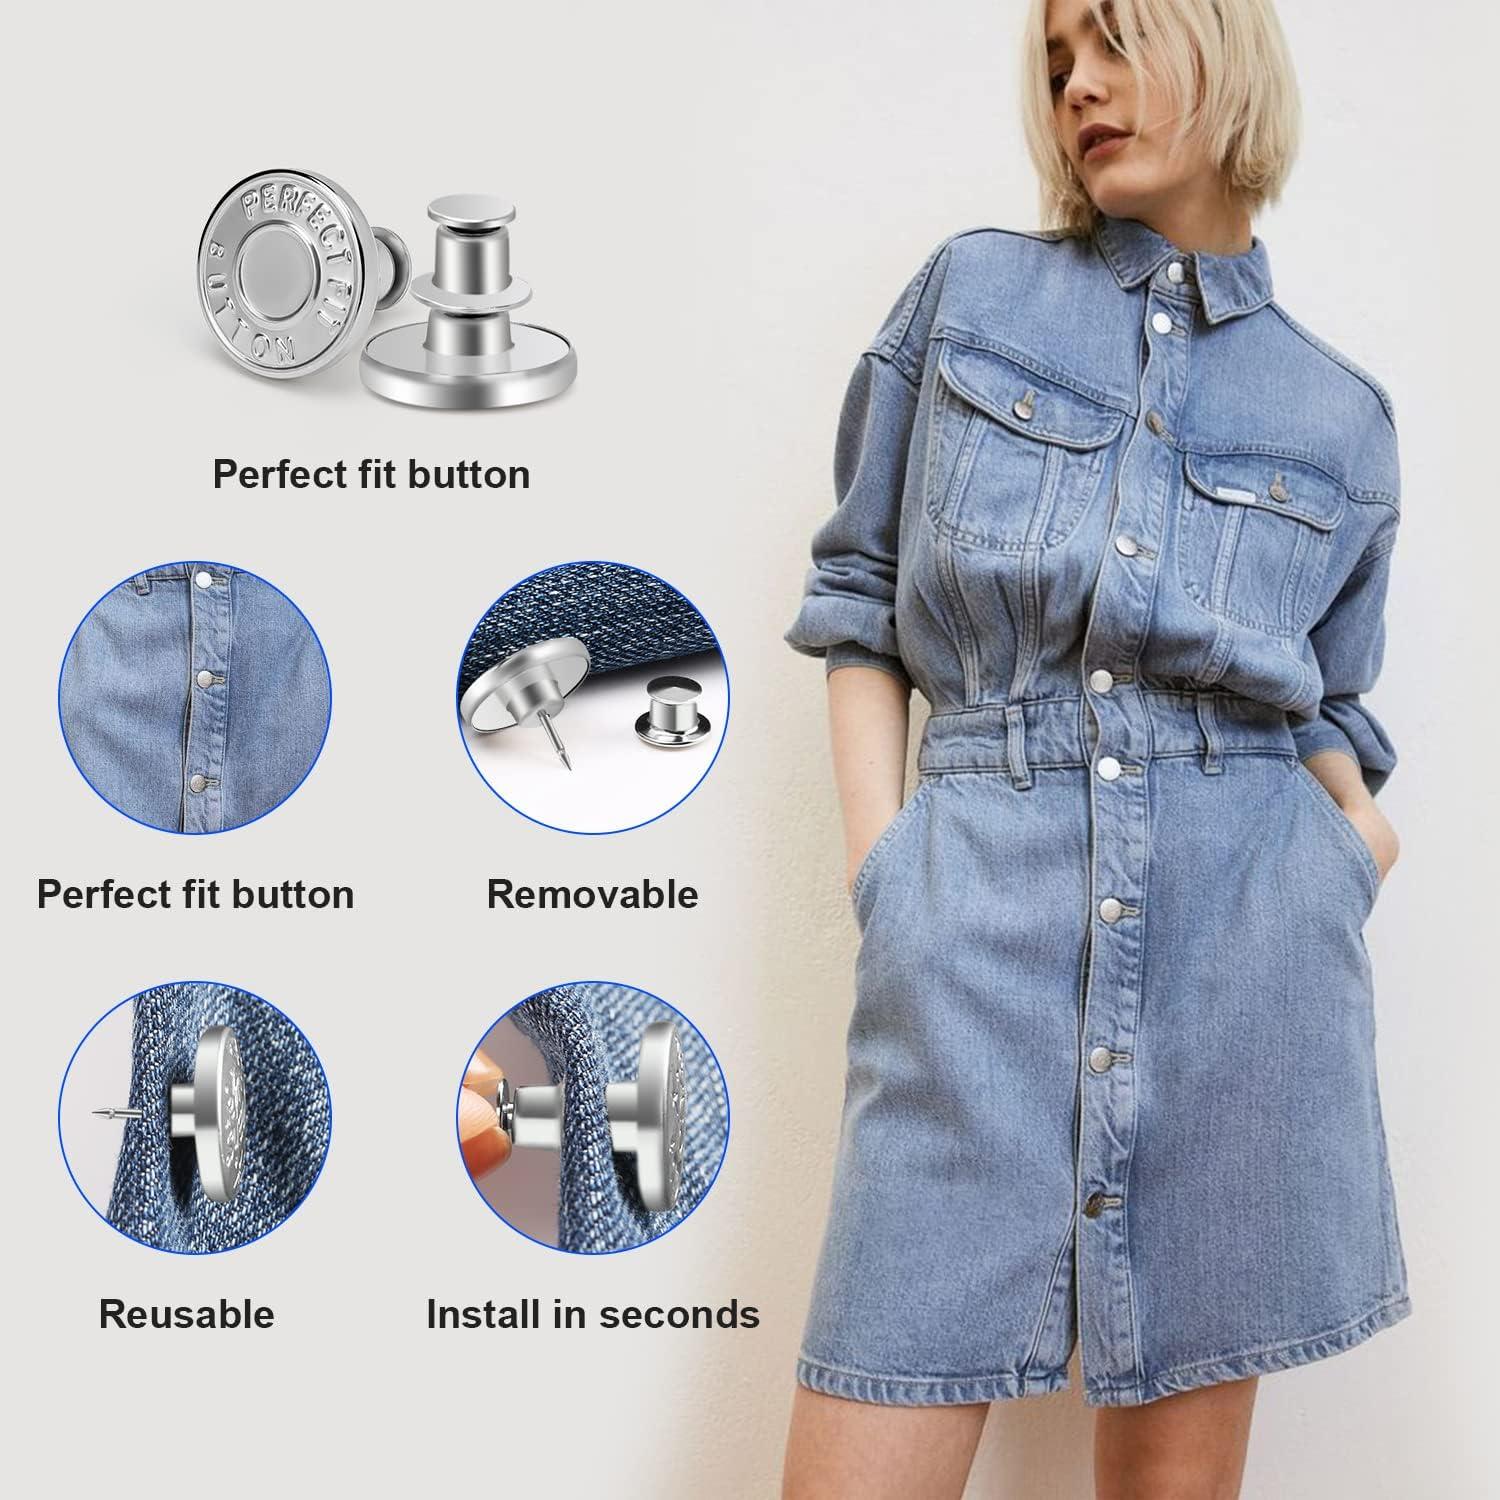 12 Sets Button Pins for Jeans Pants, Adjustable Reusable Jean